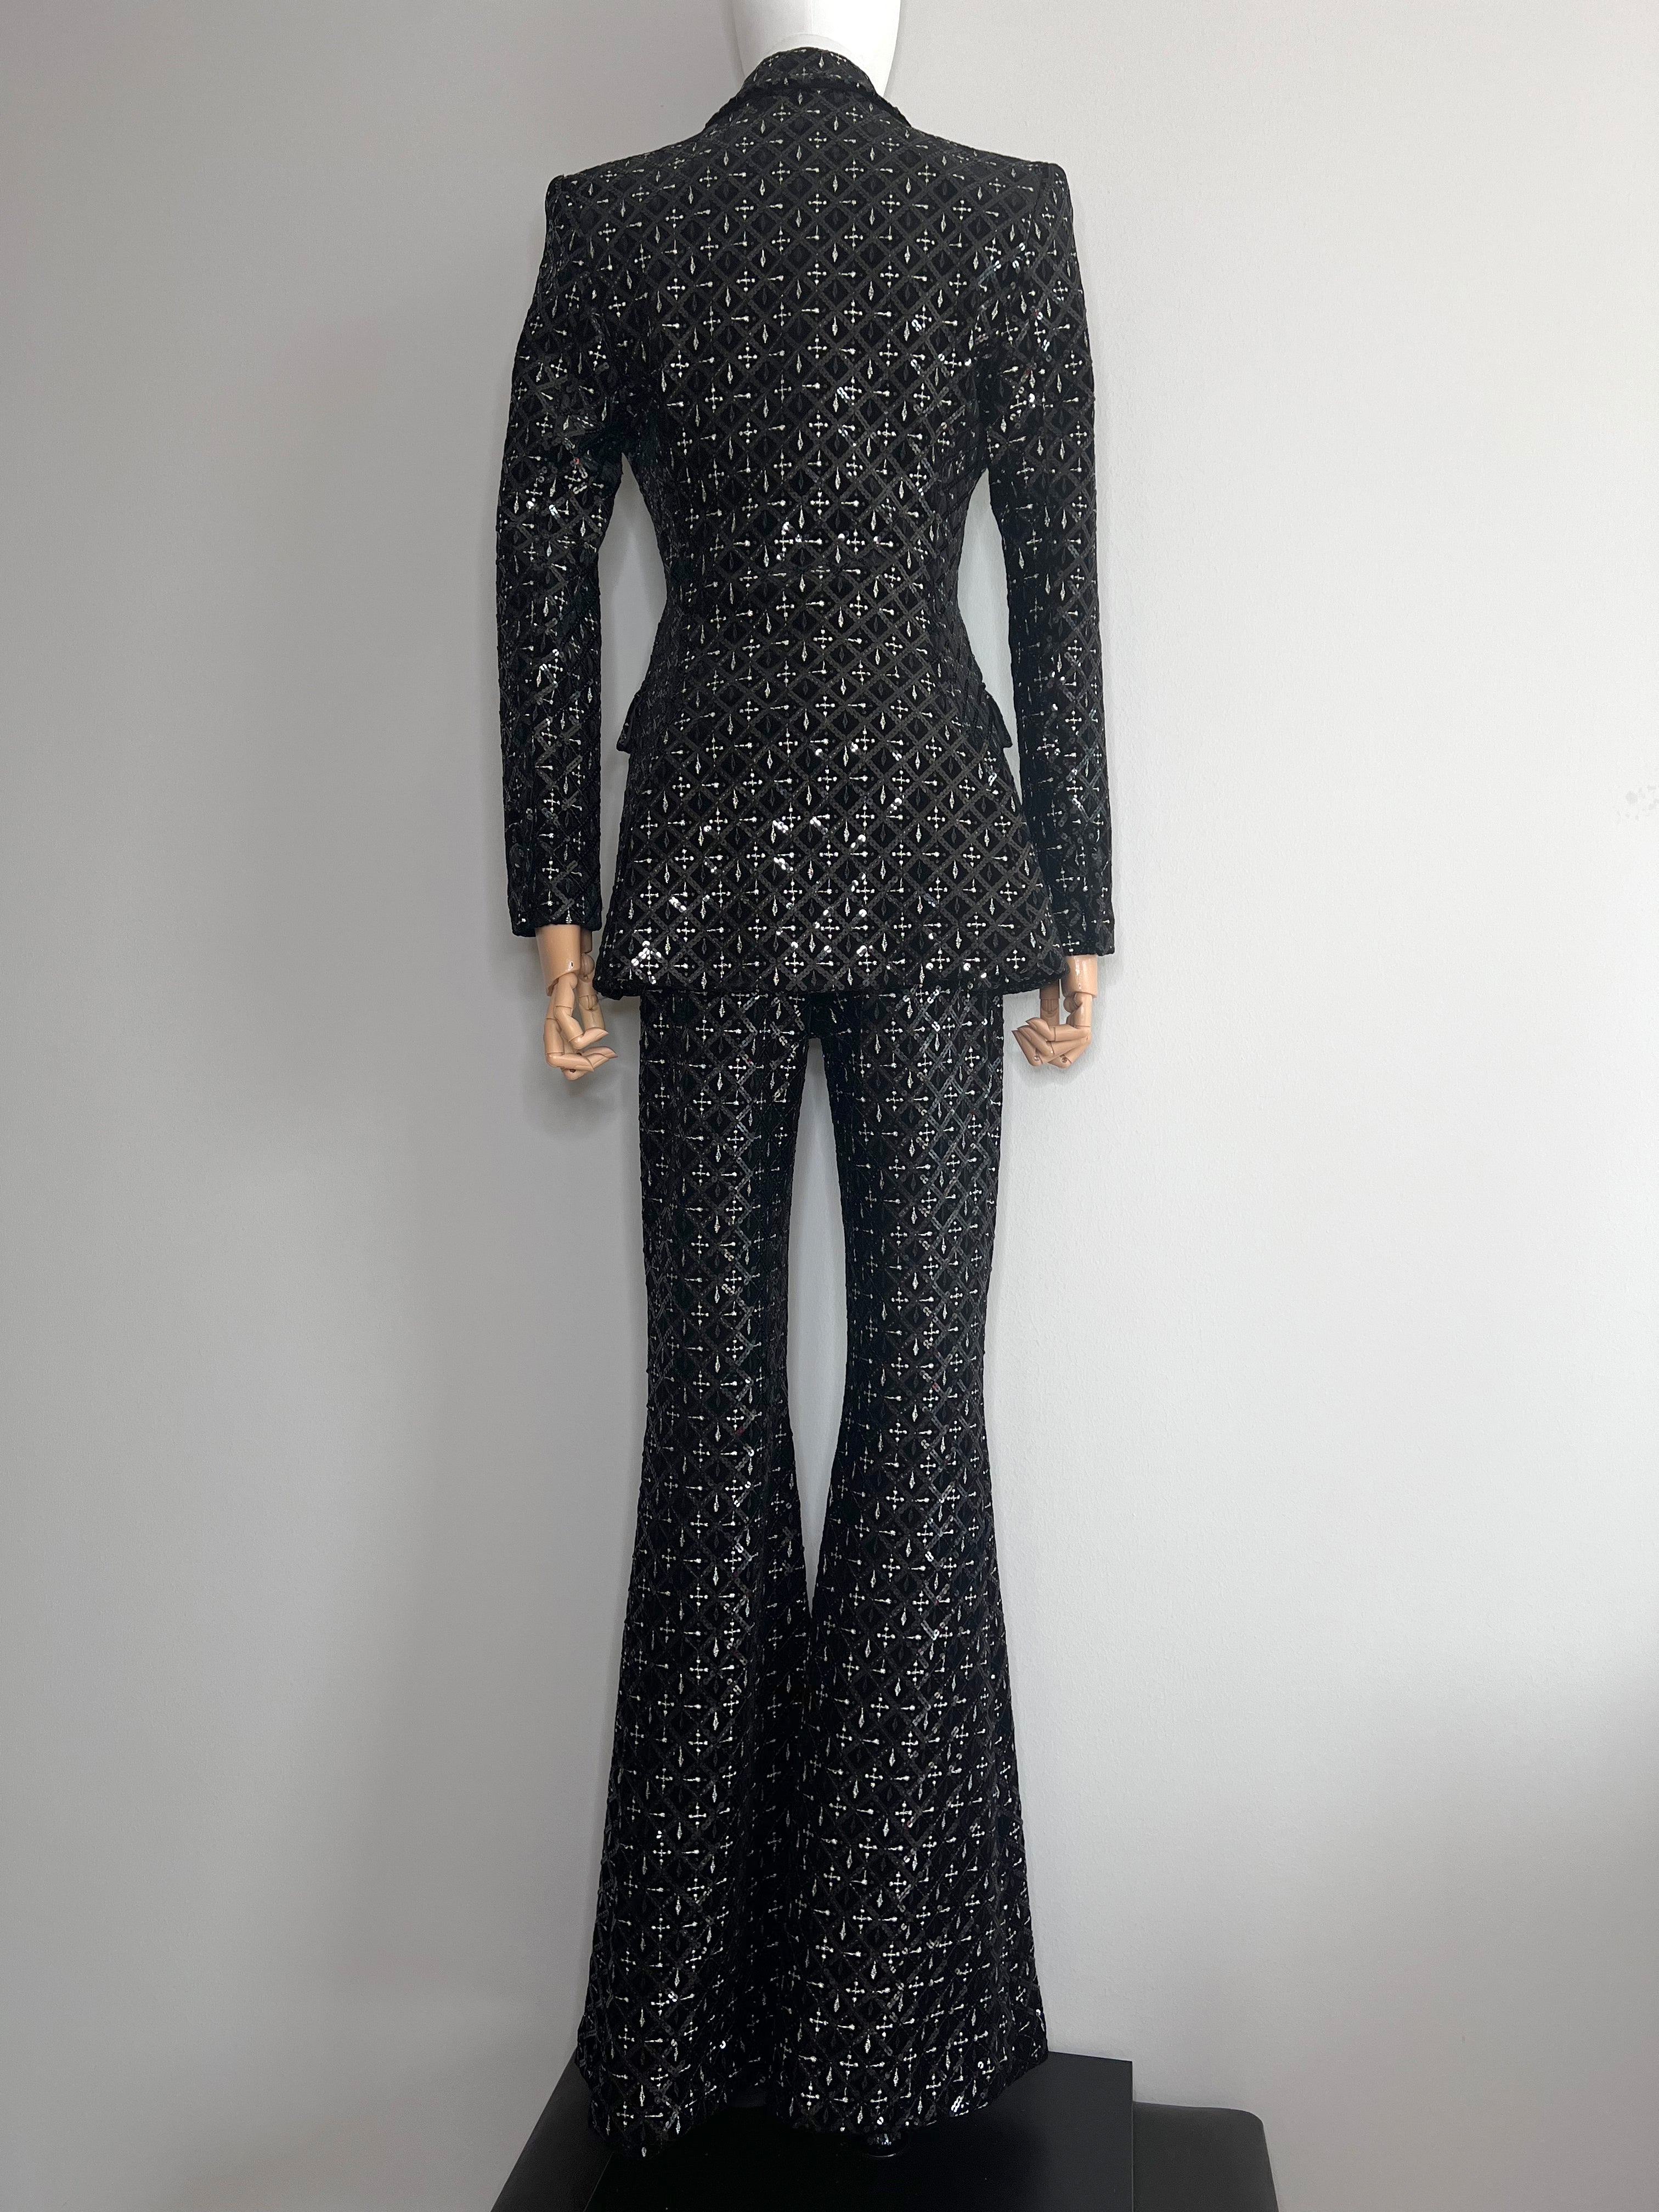 Brand new! set of meghan black blazer & trouser velvet fabric with silver embroidered detail in black wet look sequin - NADINE MERABI